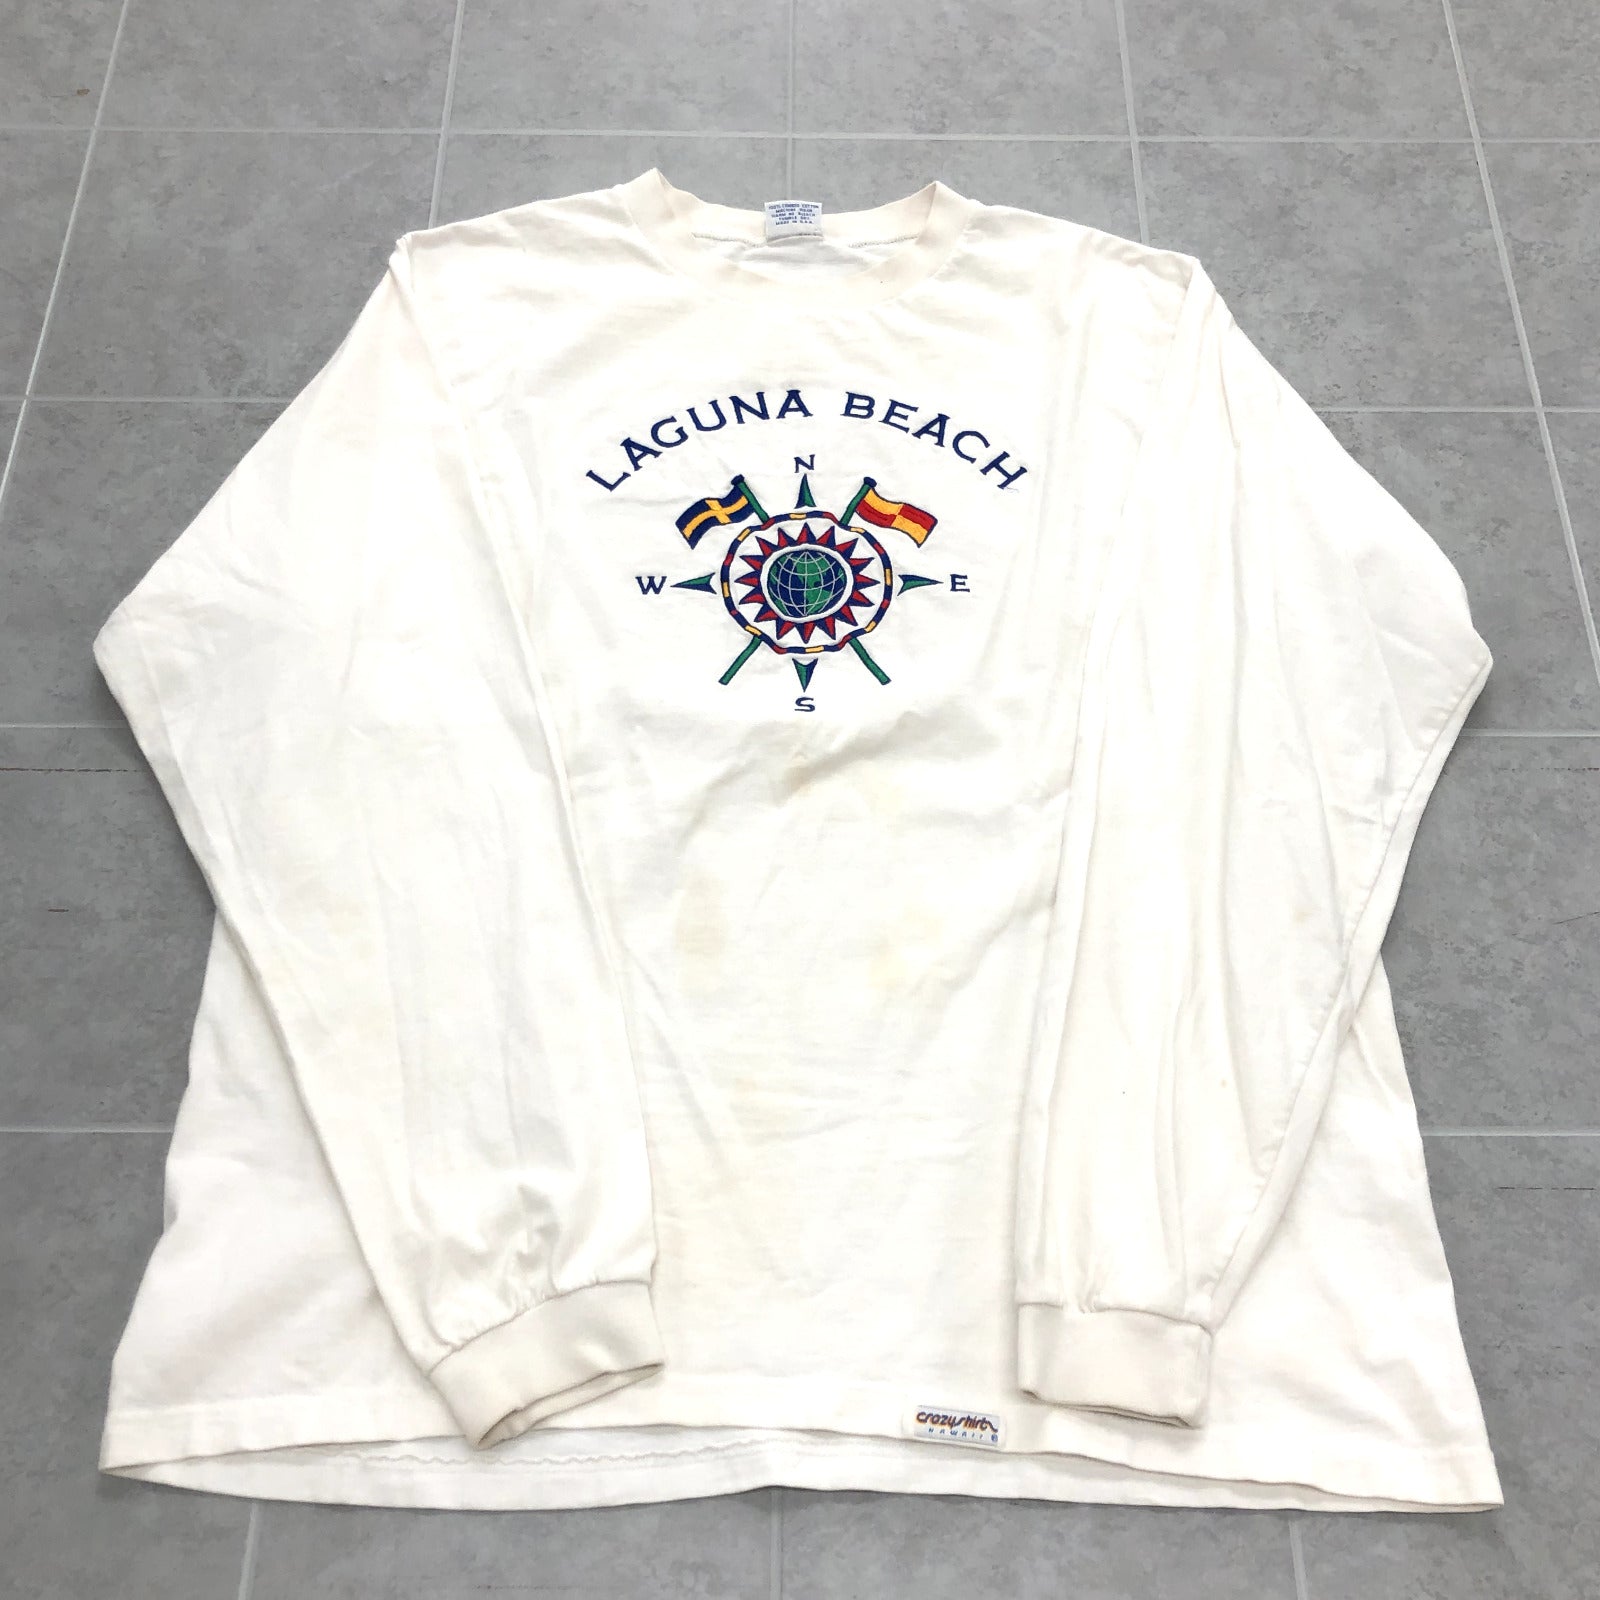 Vintage Crazy Shirt White Short Sleeve Graphic Aguna Beach T-shirt Adult Size L